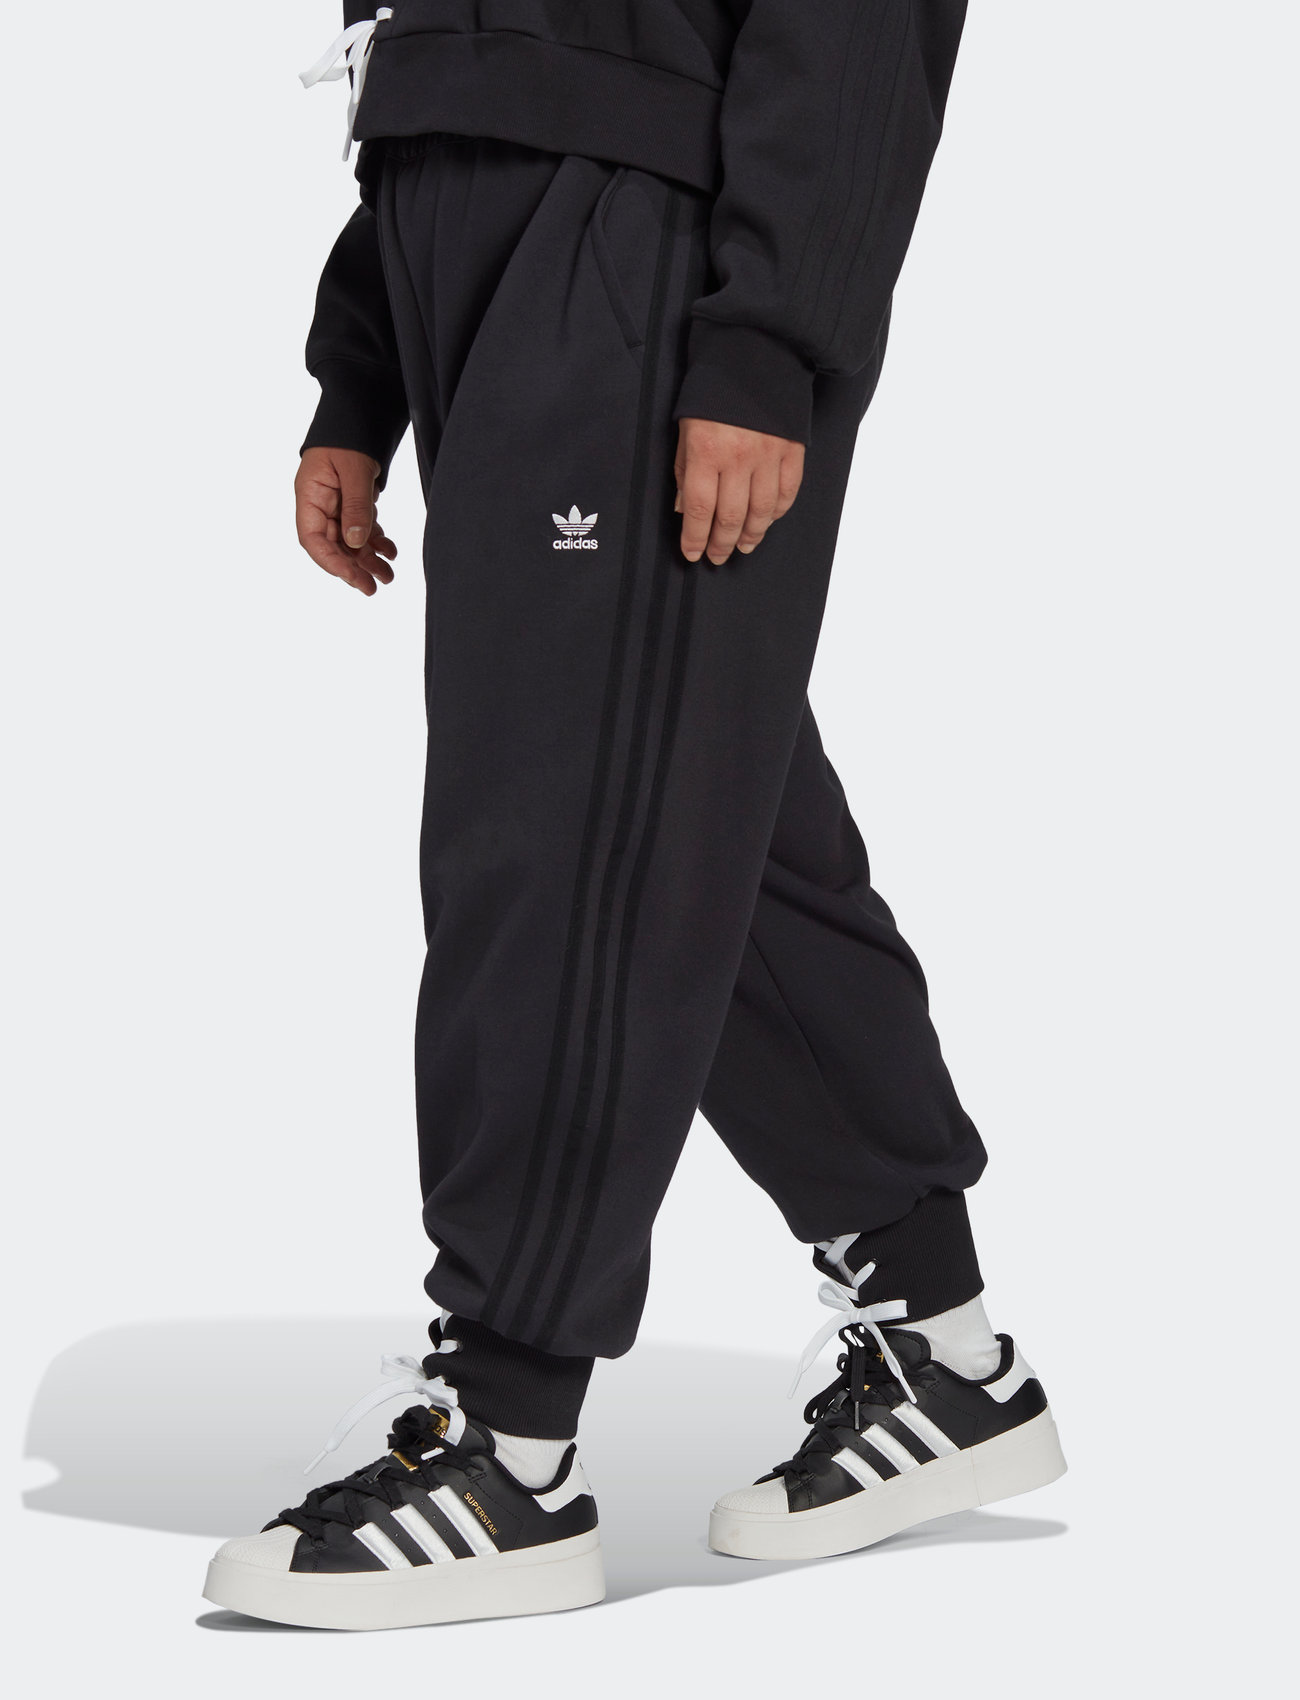 adidas Originals Always Original Laced Cuff Tracksuit Bottoms (plus Size) -  Sweatpants